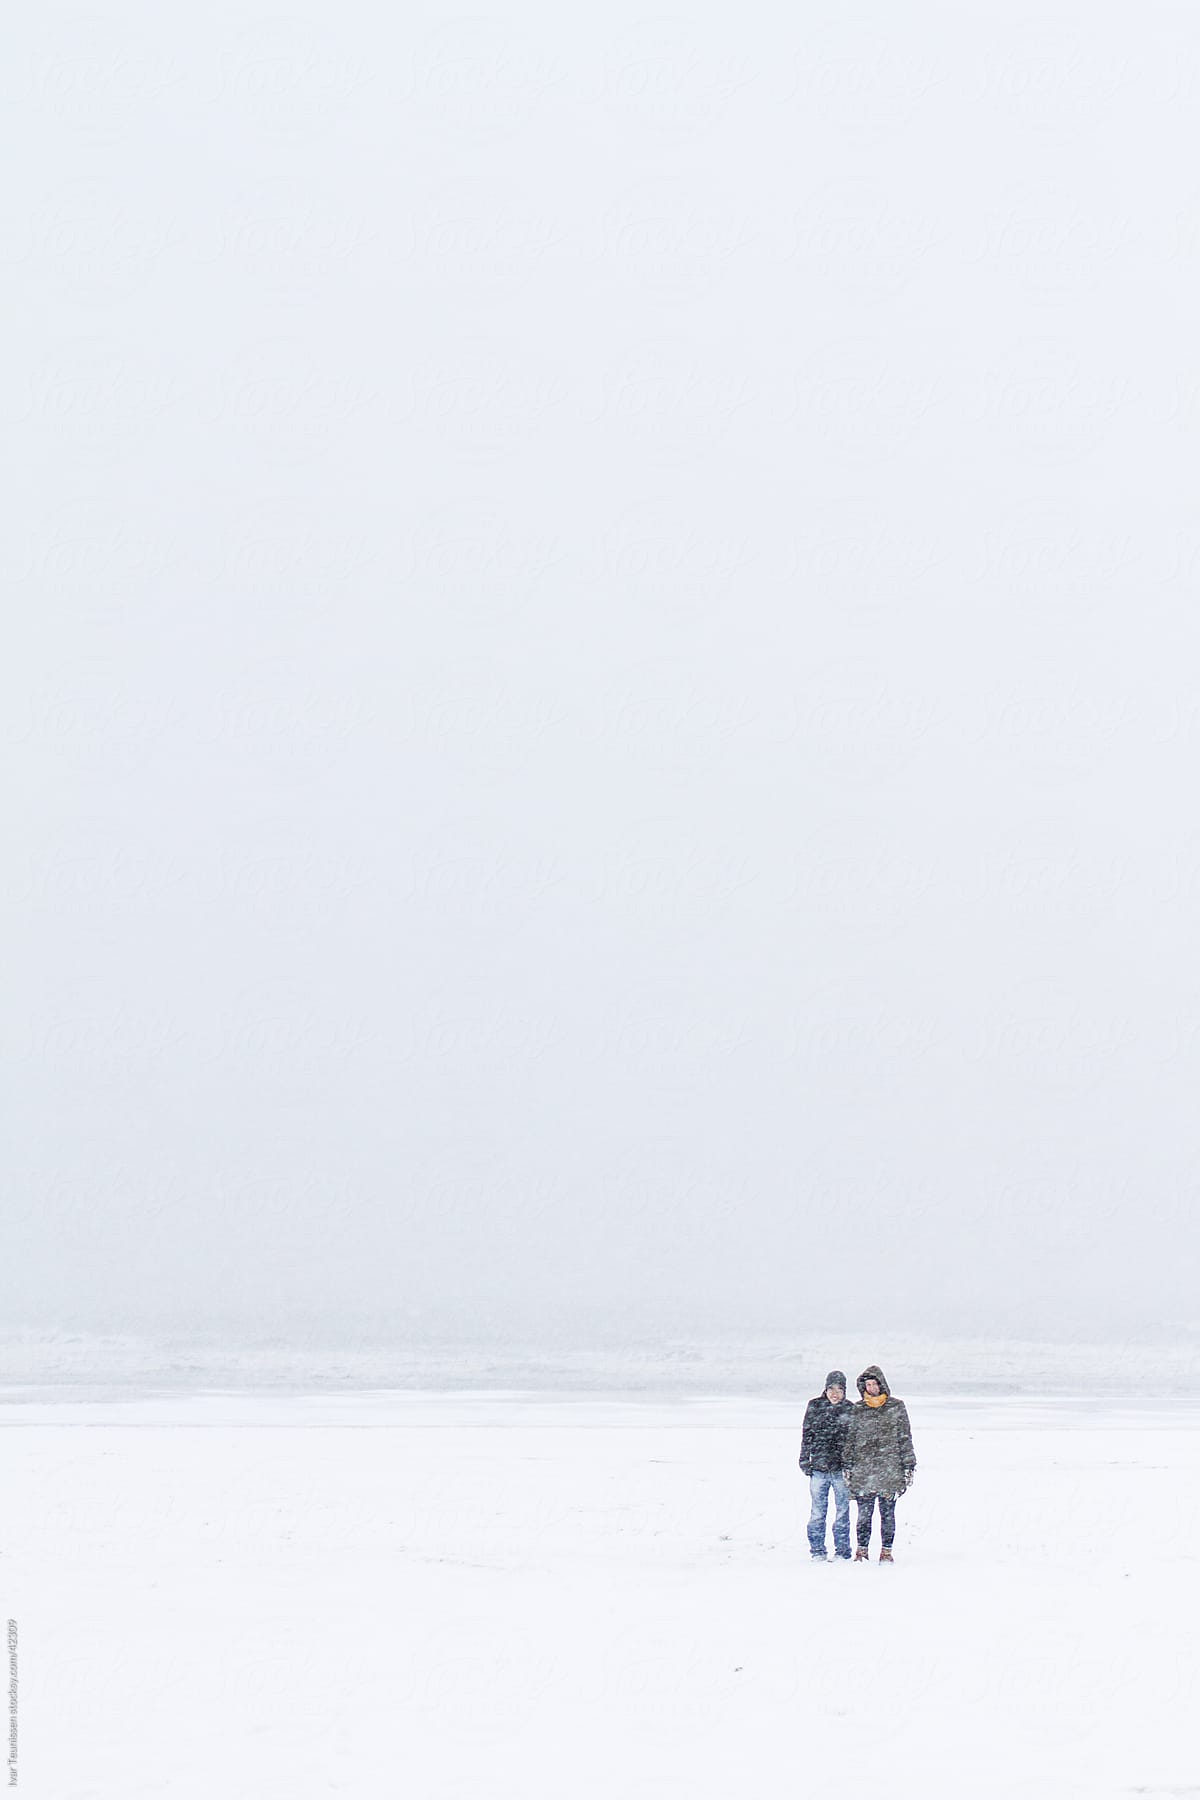 Two friends on a snowy beach